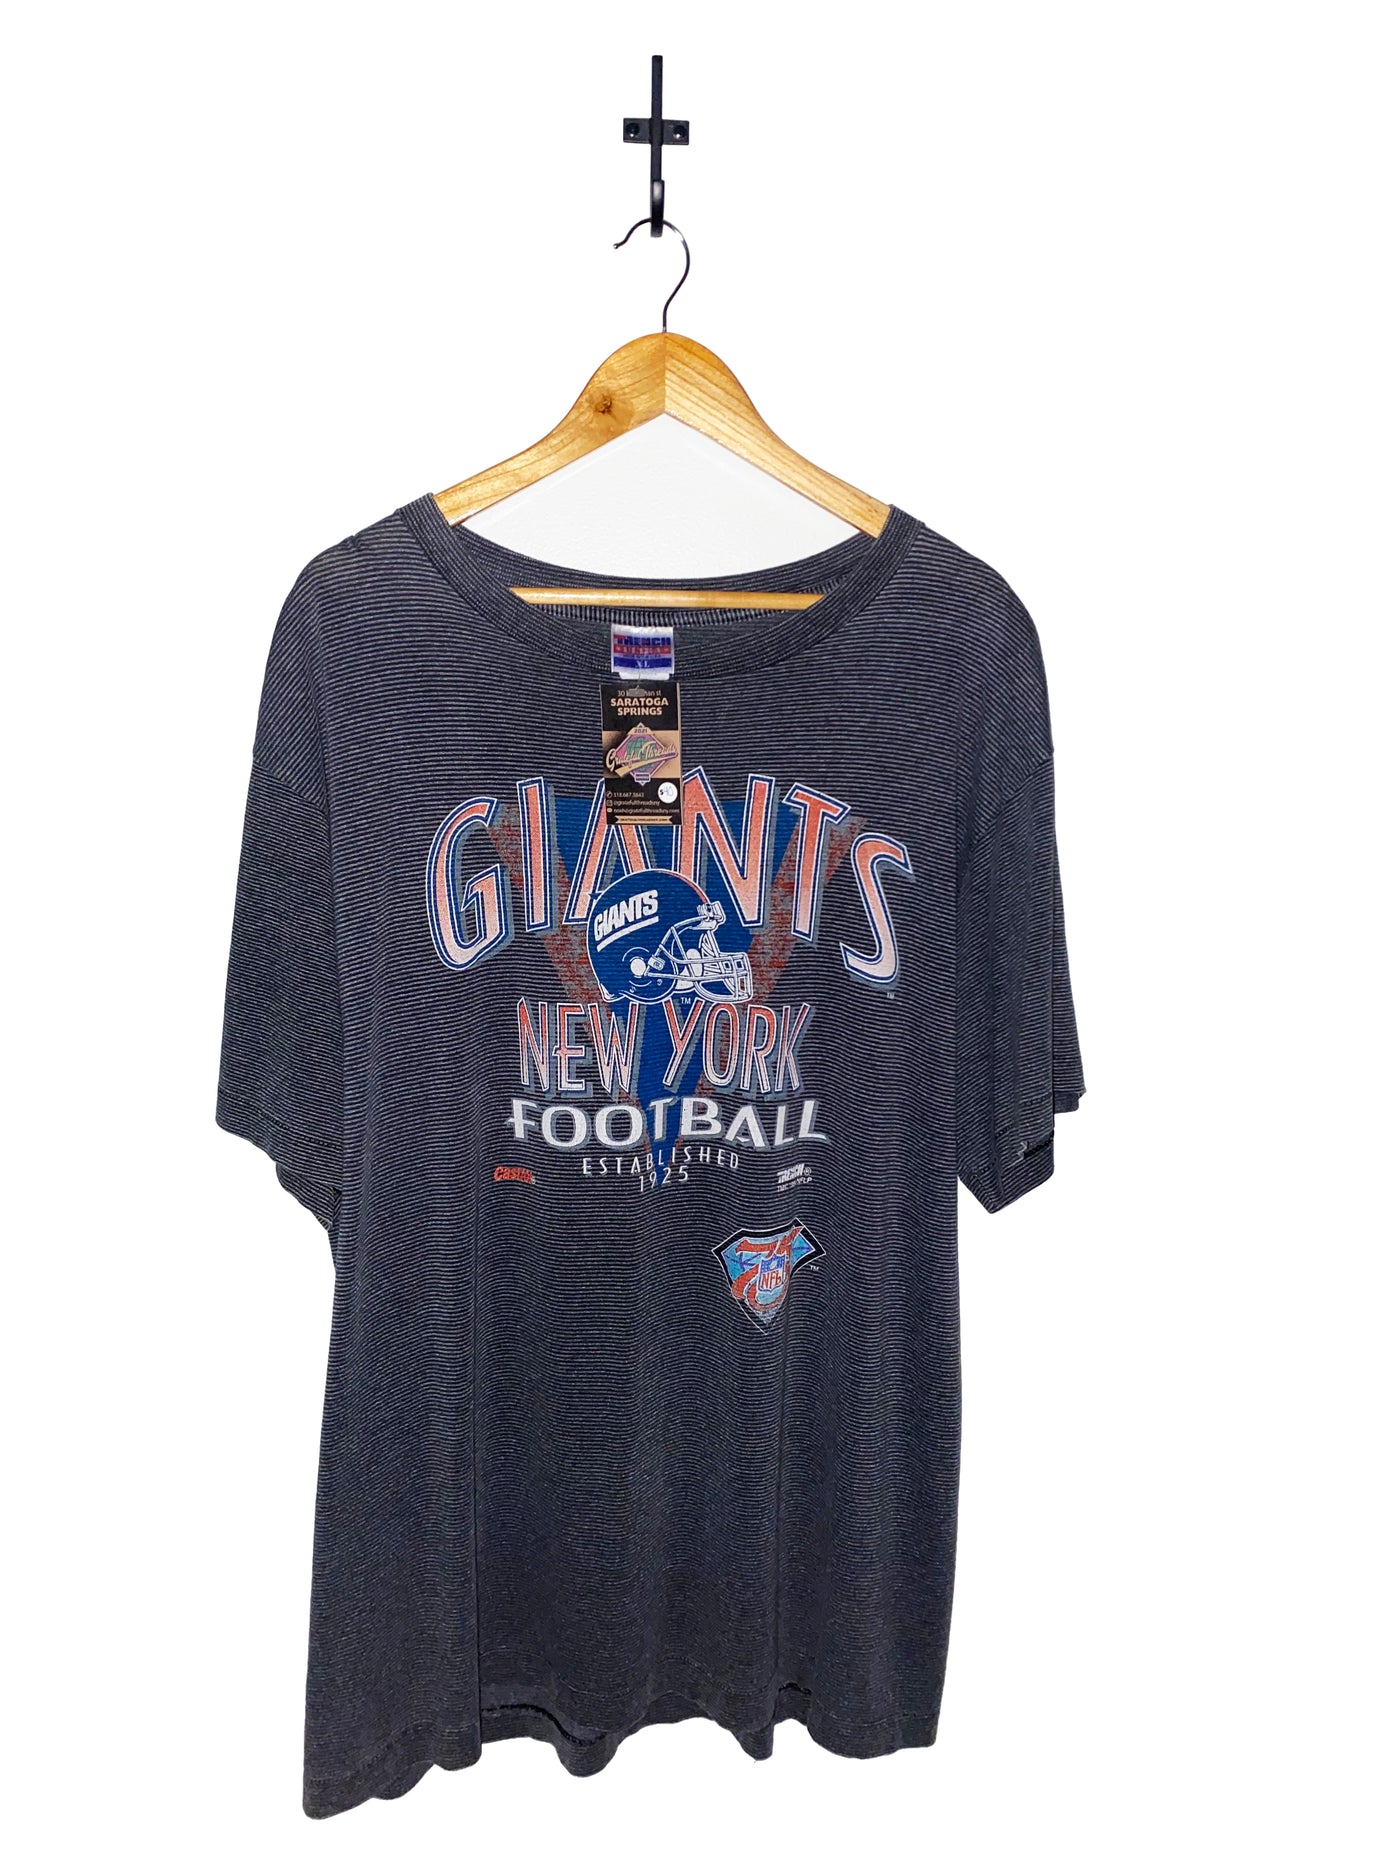 Vintage NY Giants 1994 T-Shirt